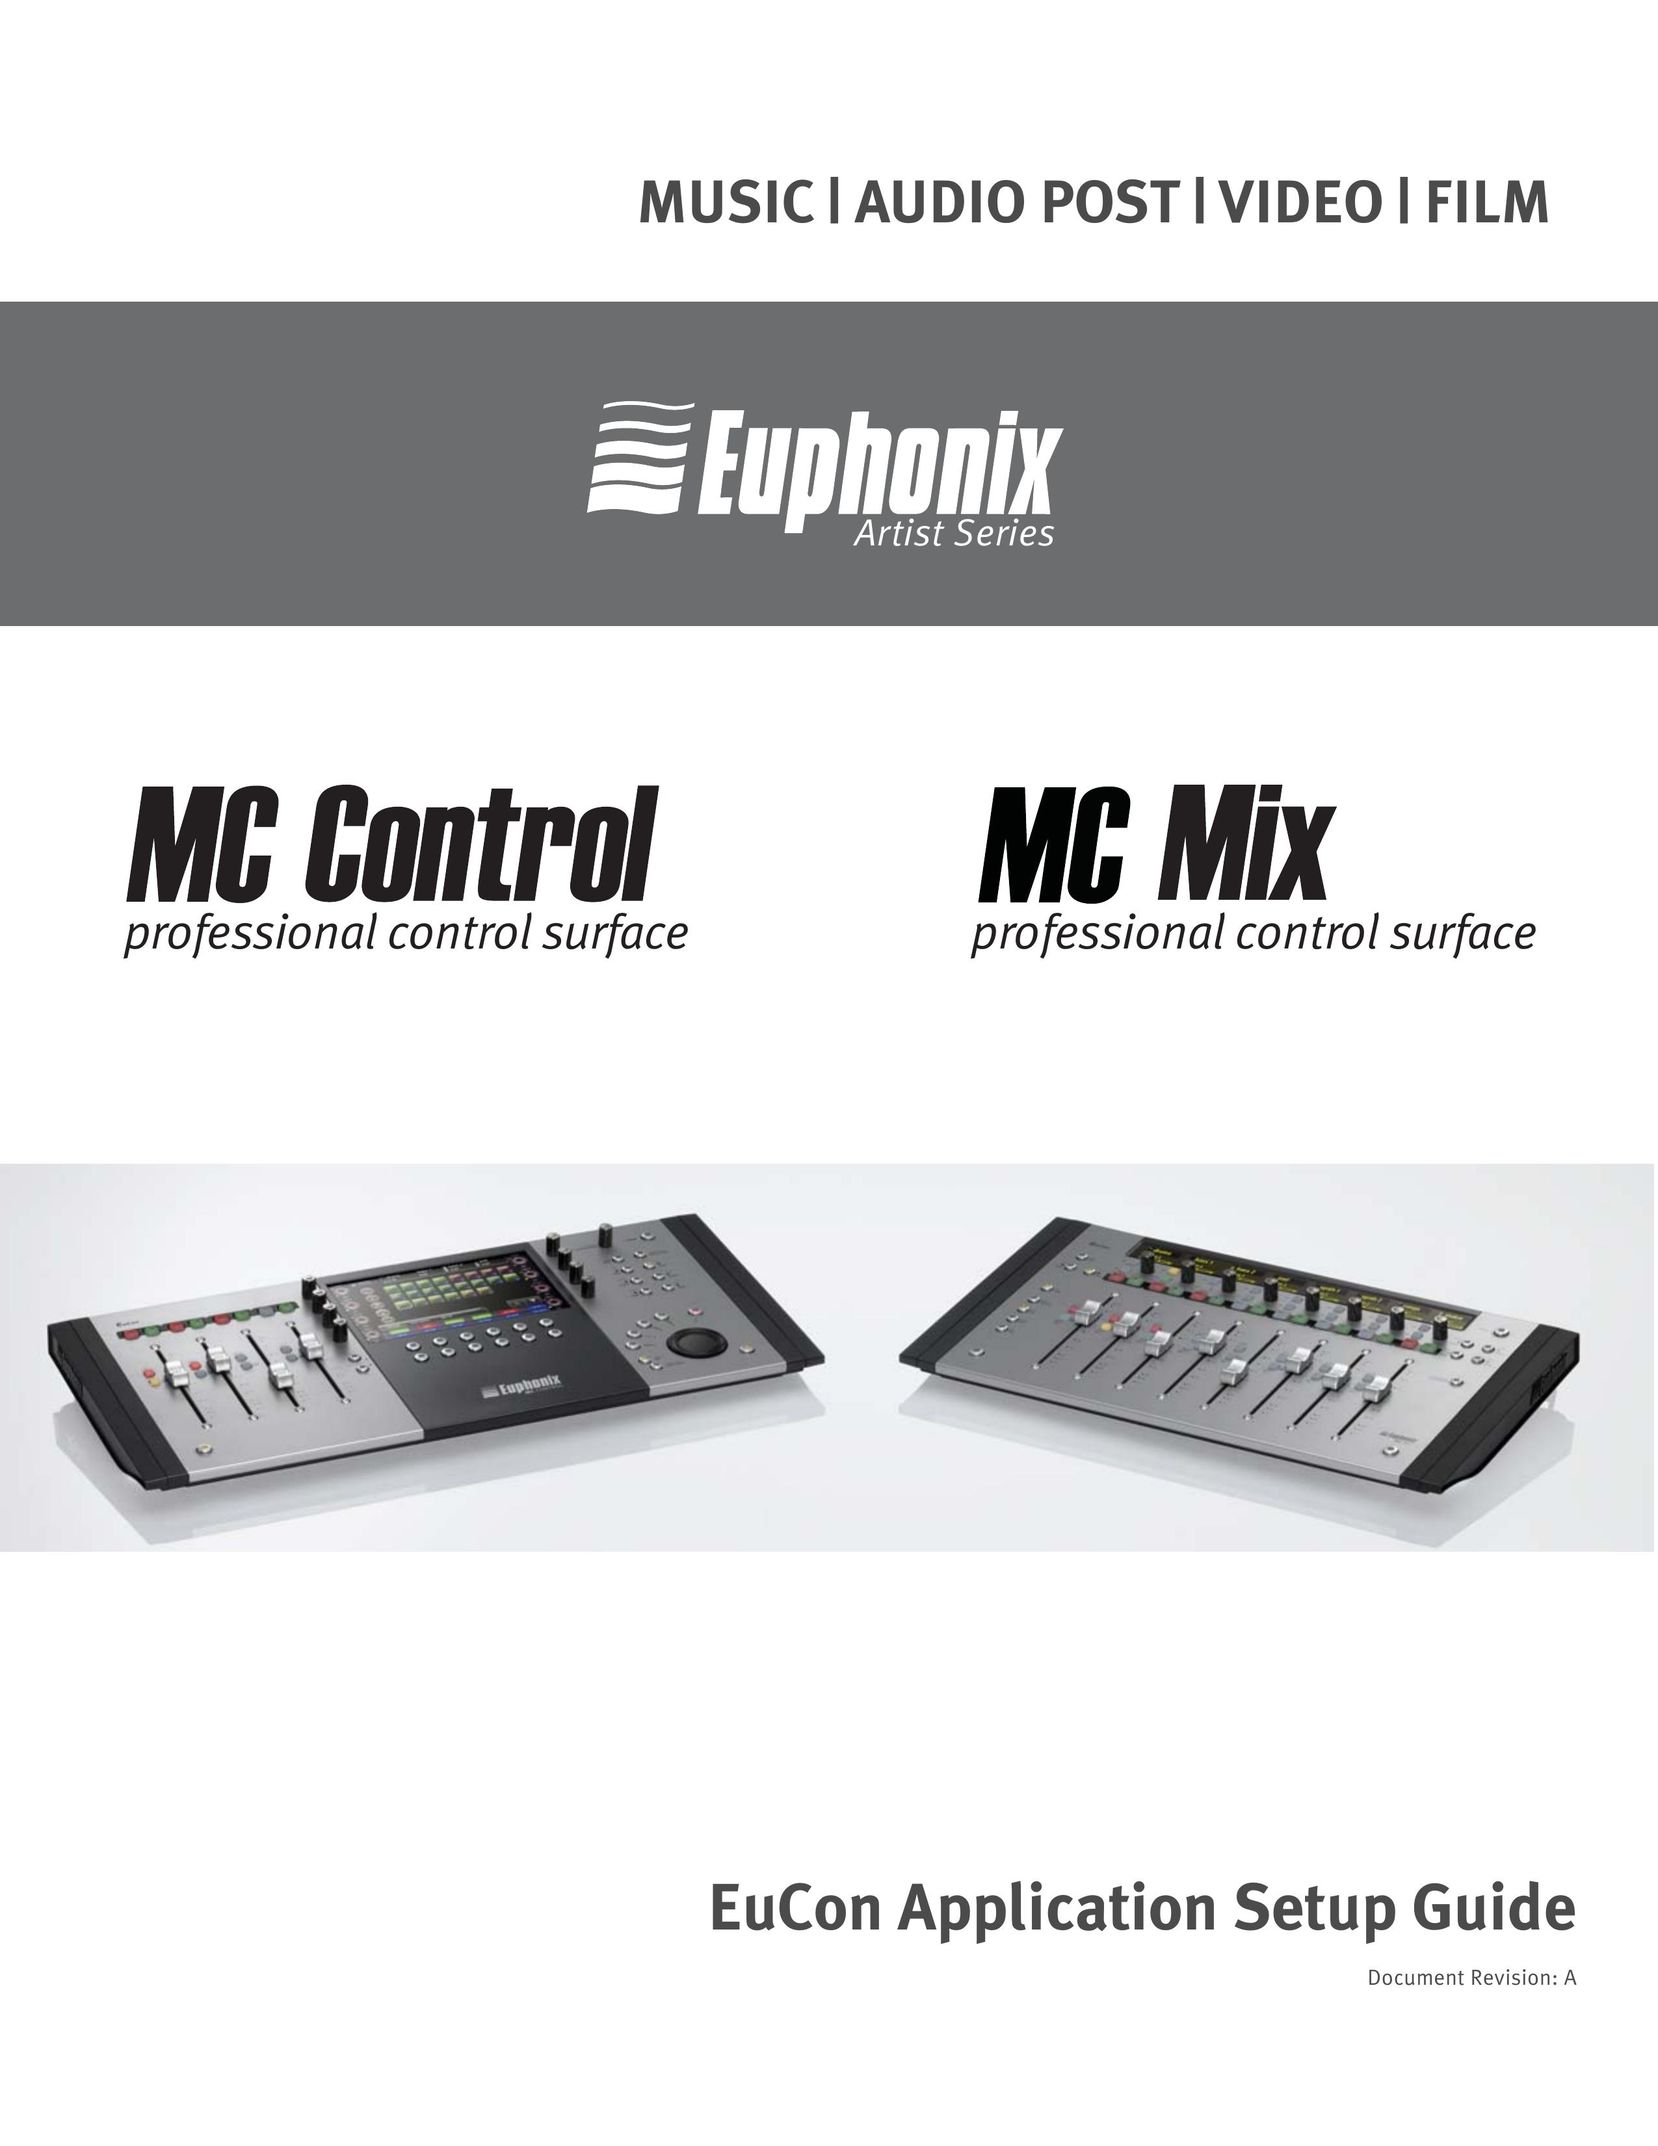 Euphonix Professional Control Surface Video Game Controller User Manual